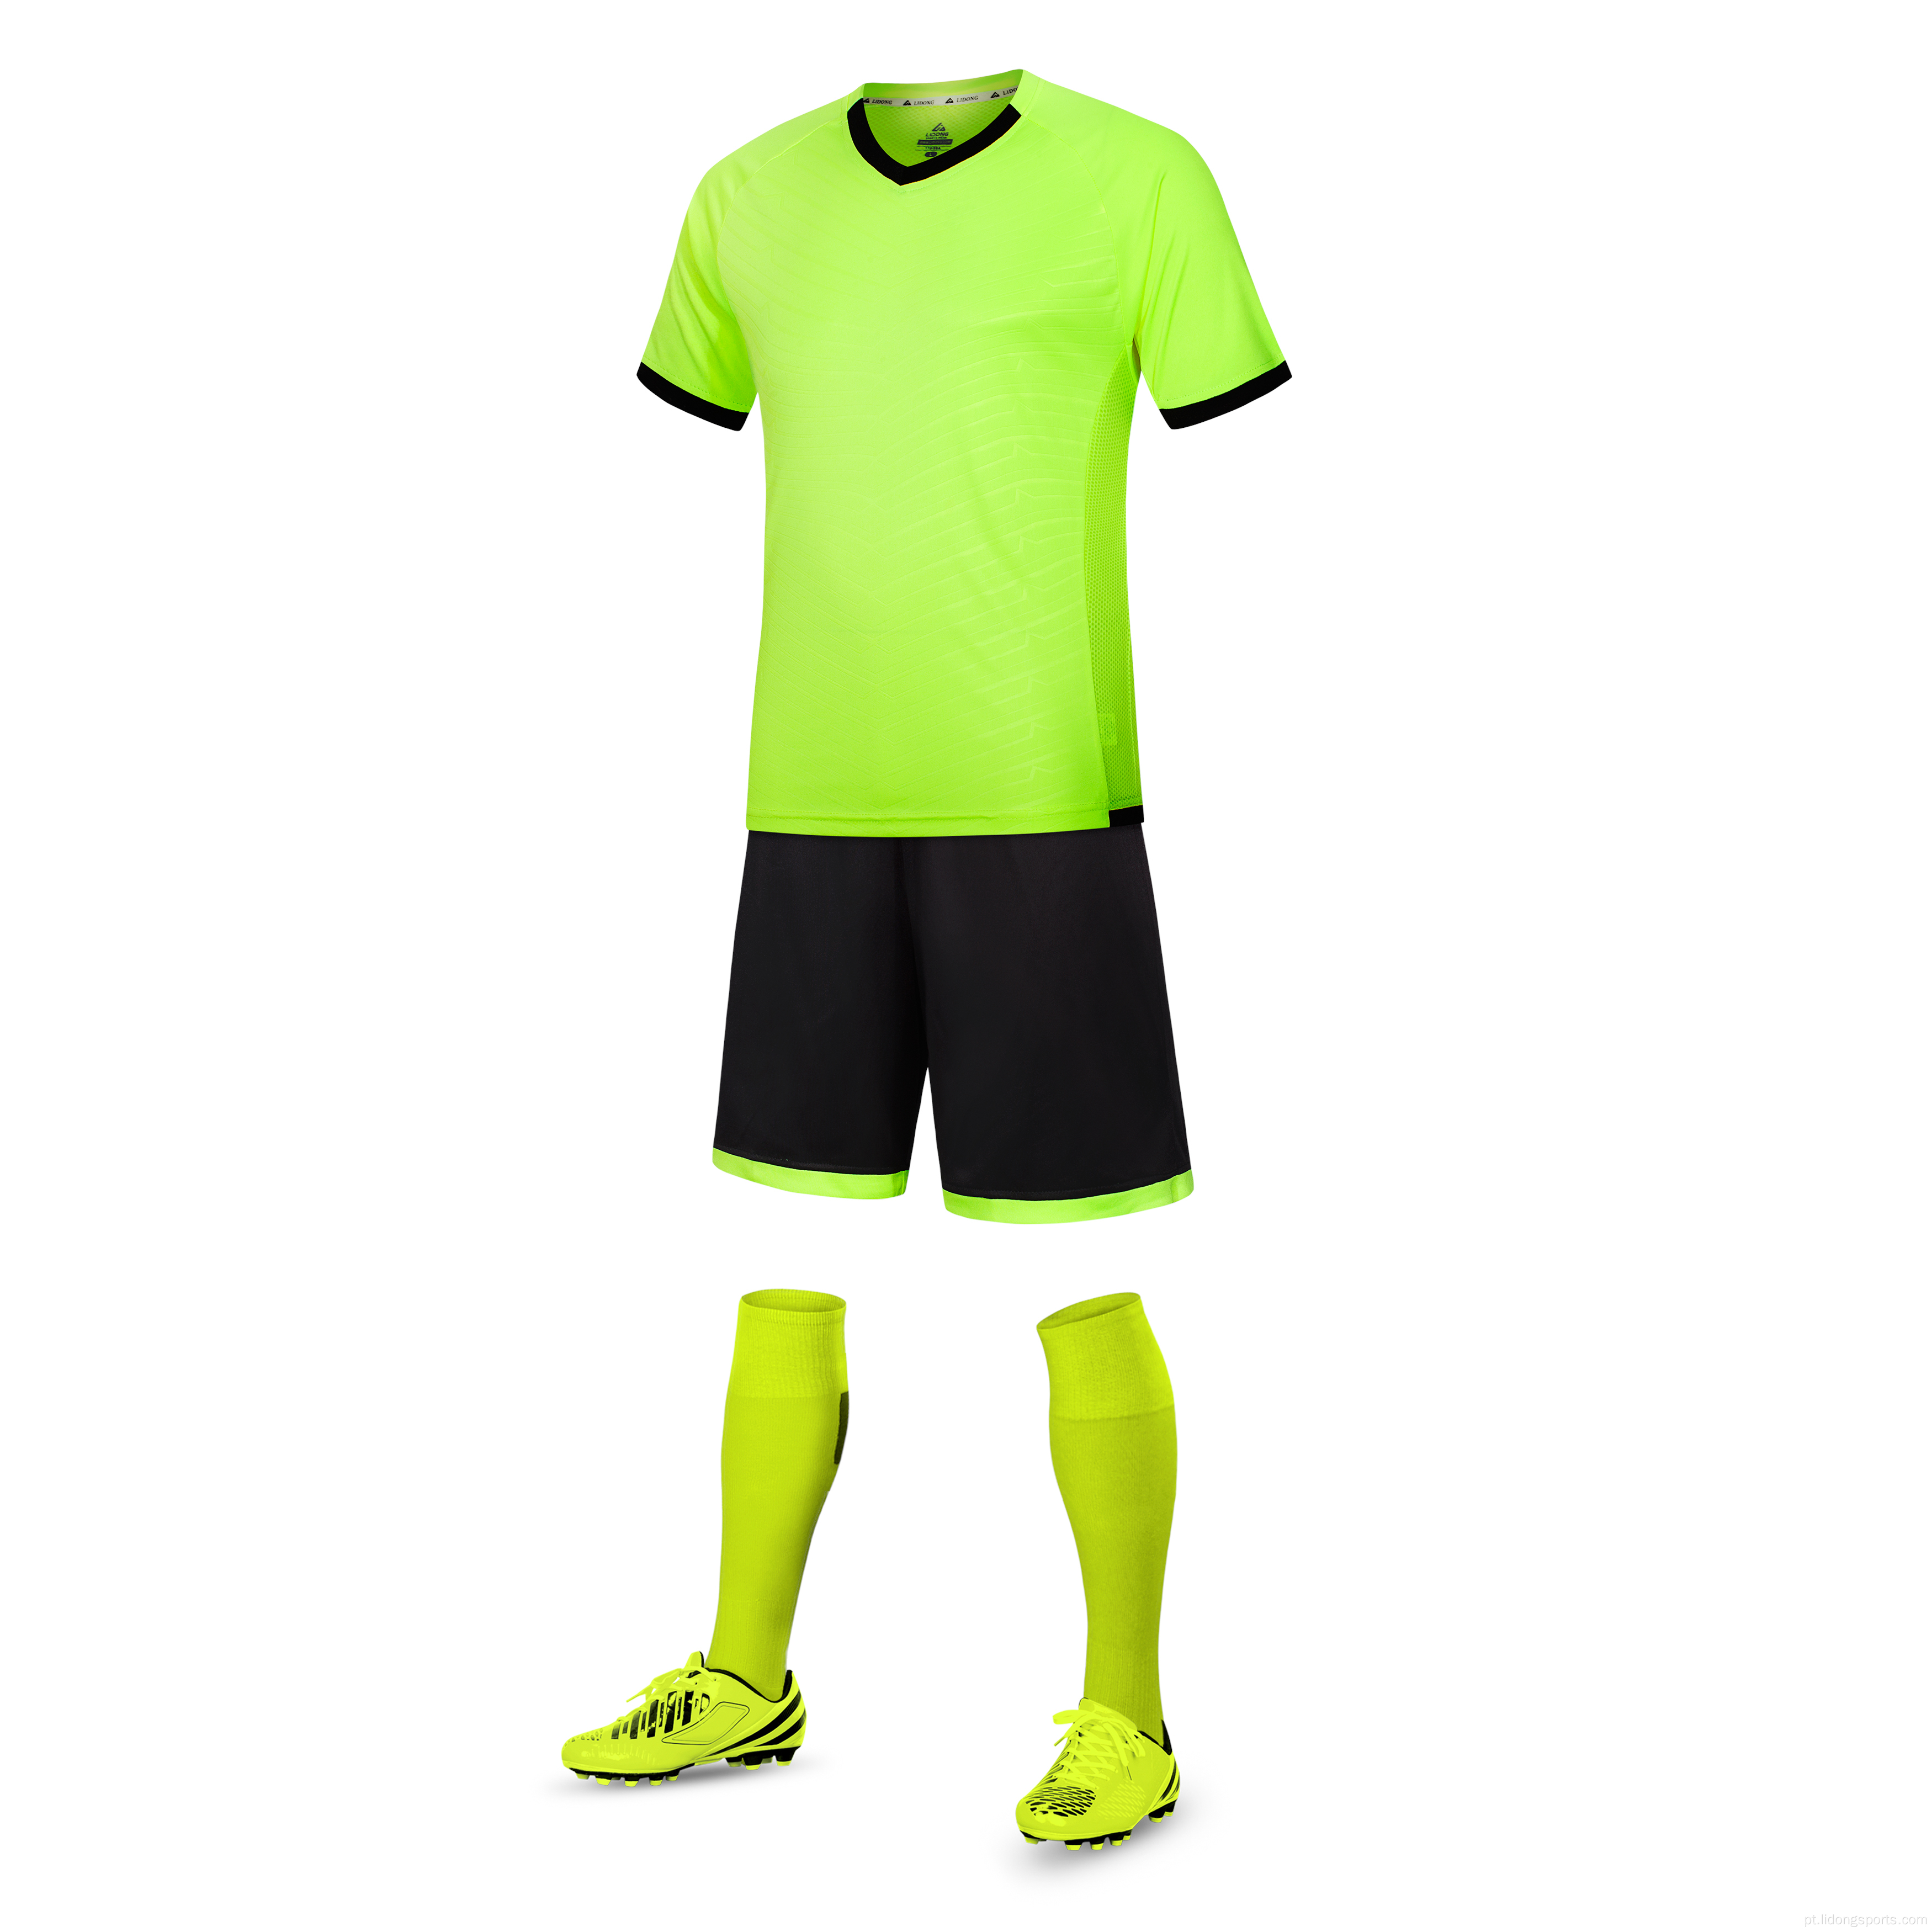 Conjunto de uniformes de futebol por atacado/camisa de futebol juvenil